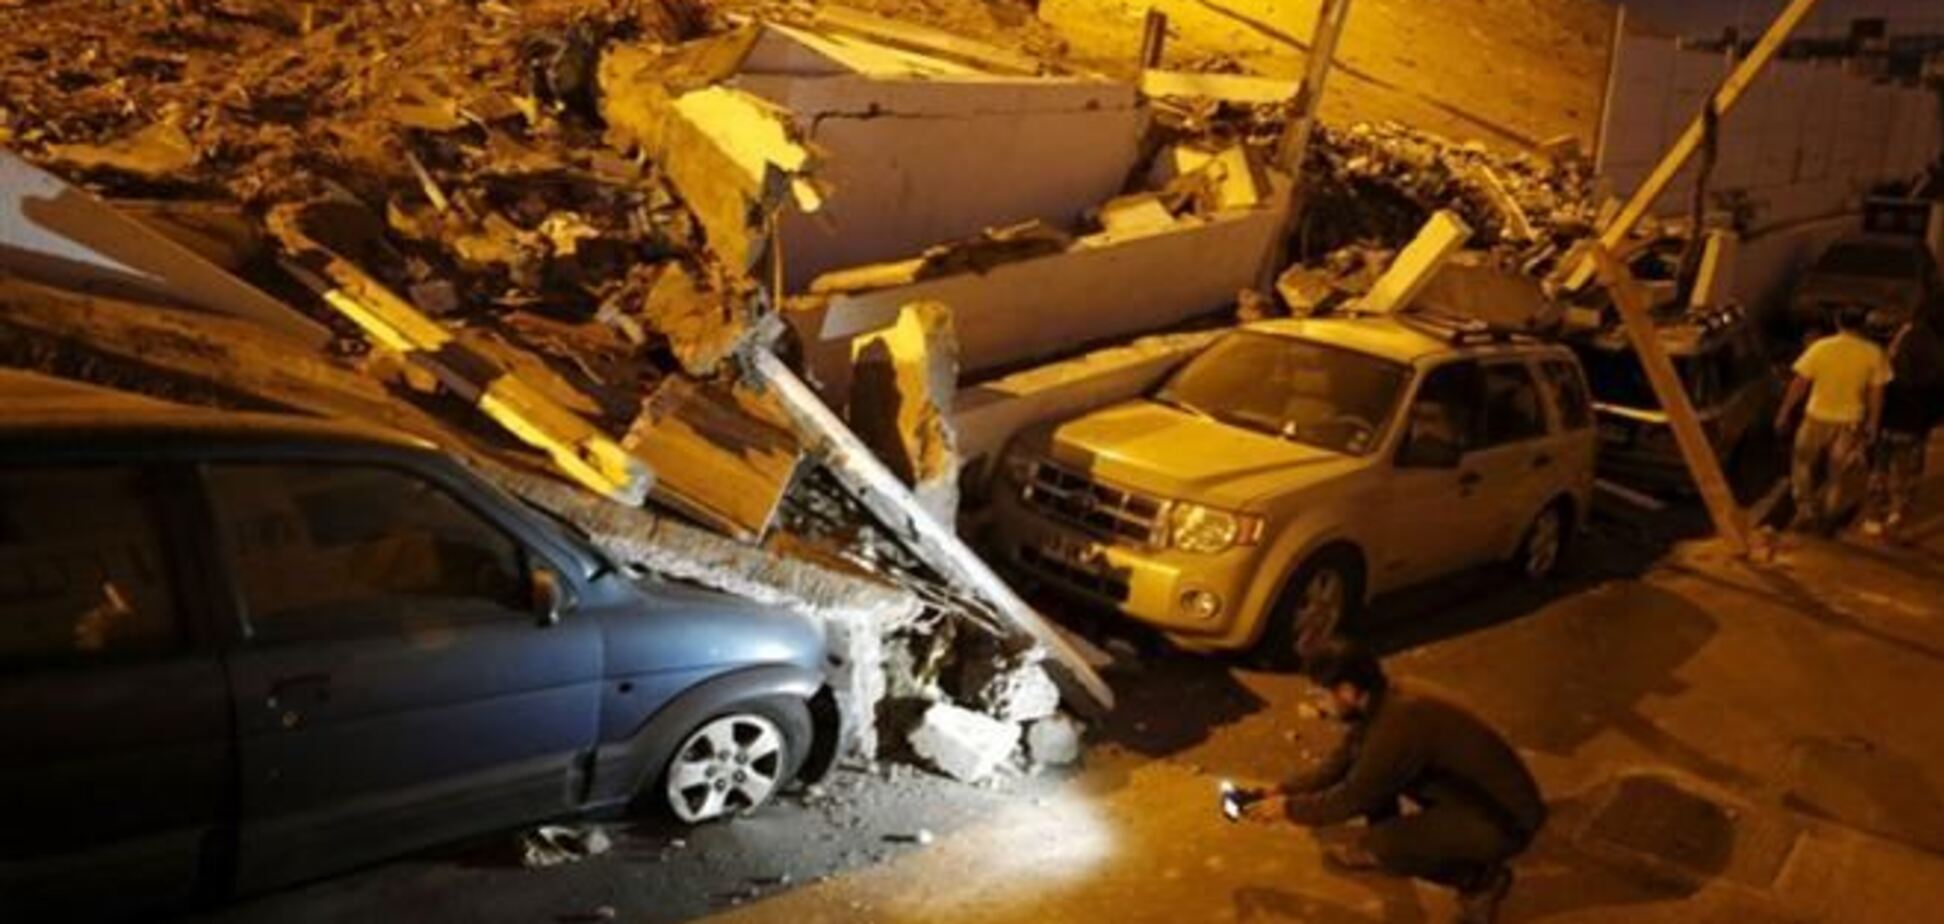  Последствия землетрясения в Чили